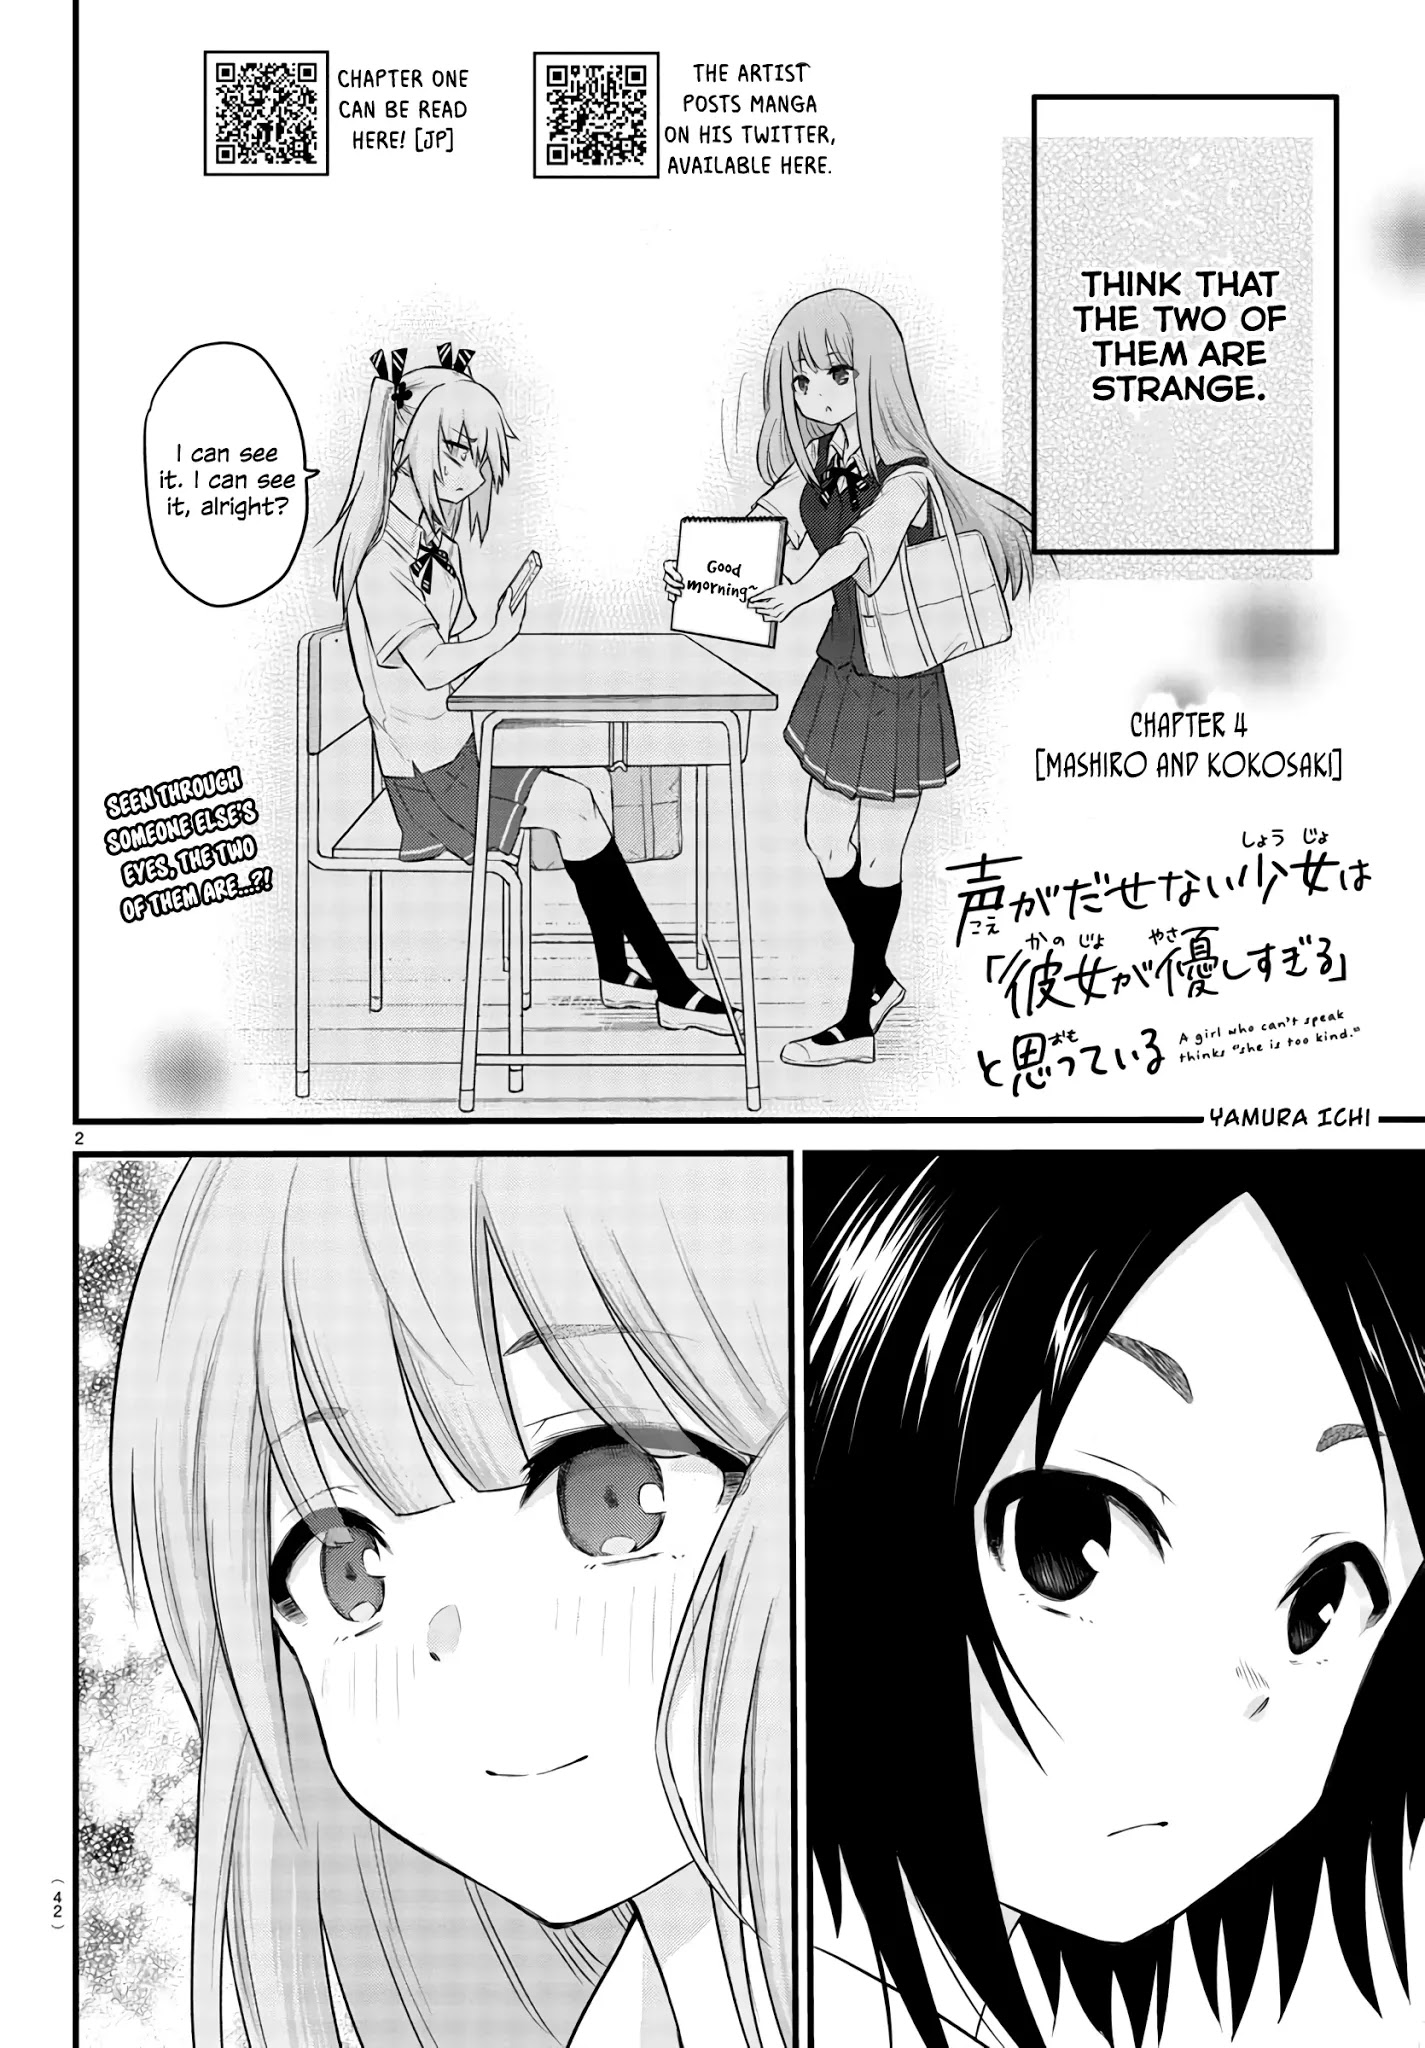 The Mute Girl And Her New Friend (Serialization) Chapter 4: Mashiro And Kokosaki - Picture 2